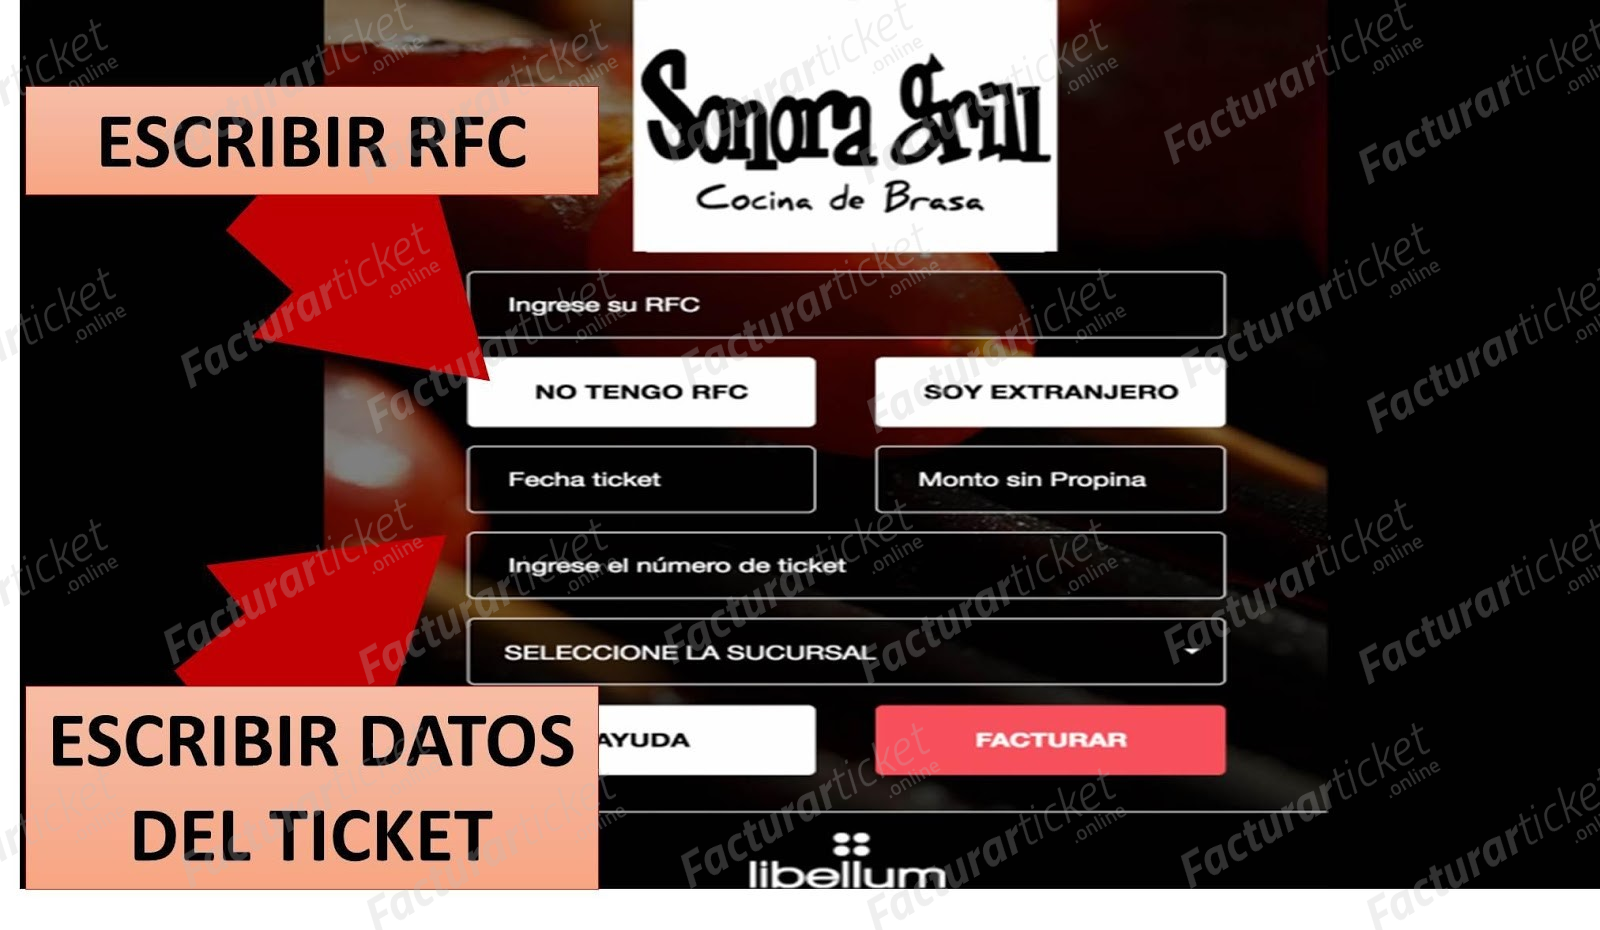 Facturación Ticket Sonora Grill